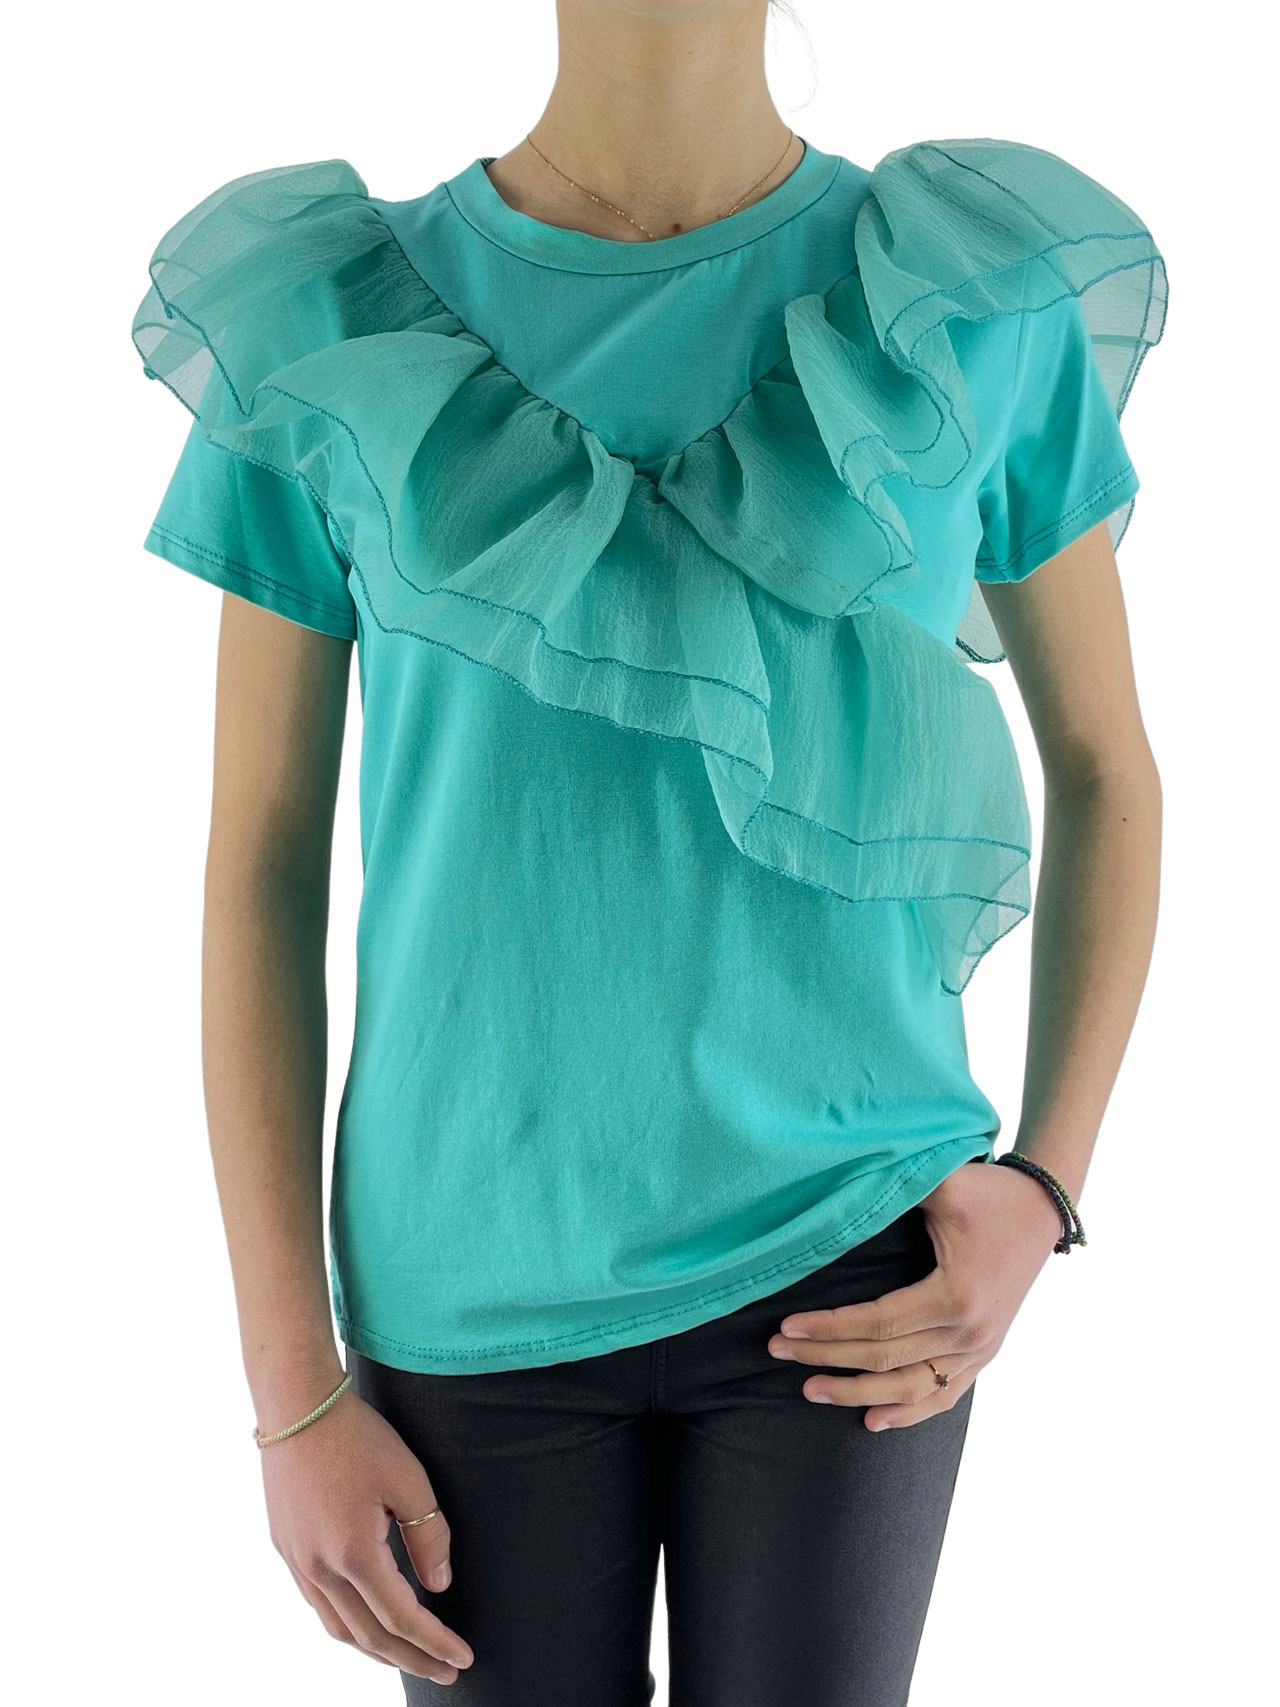 Women's blouse with ruffles code G2158